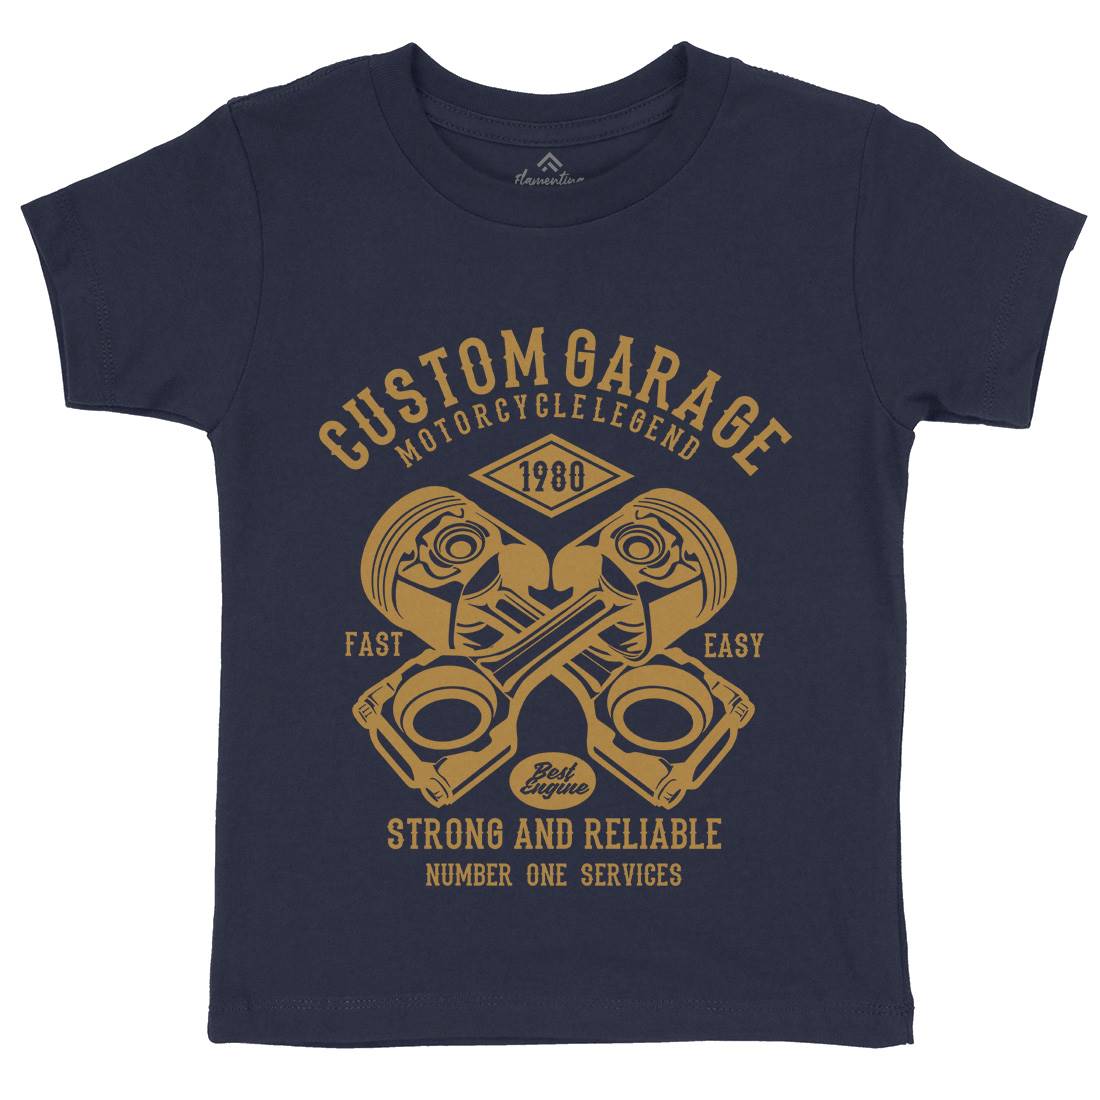 Custom Garage Kids Crew Neck T-Shirt Cars B198